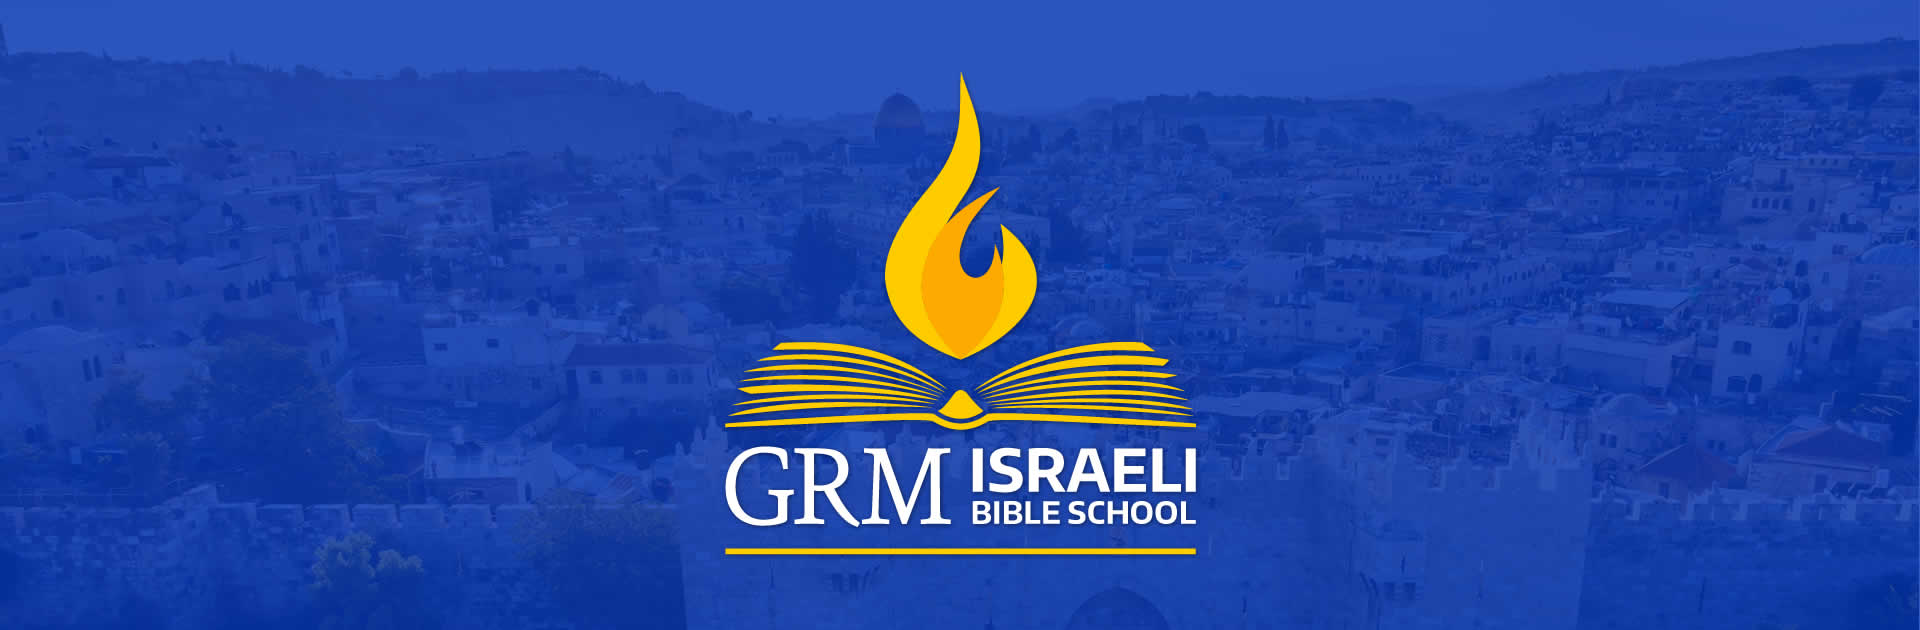 GRM Bible School banner